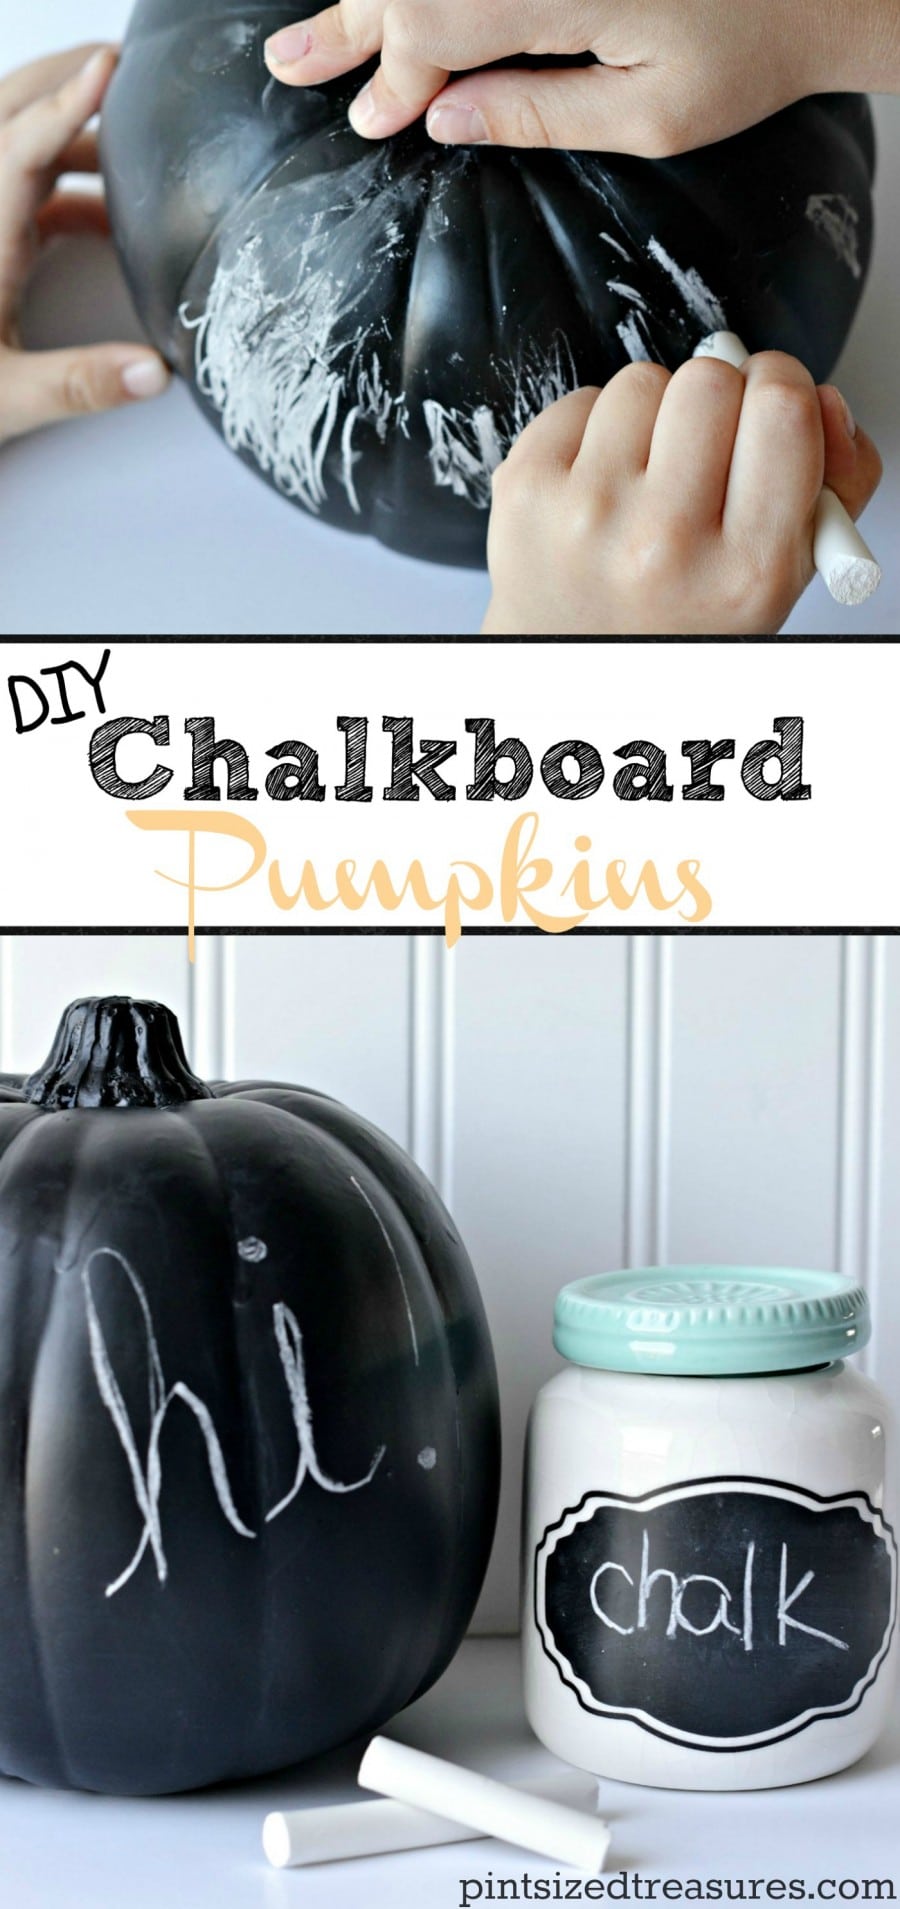 chalboard pumpkins you can make